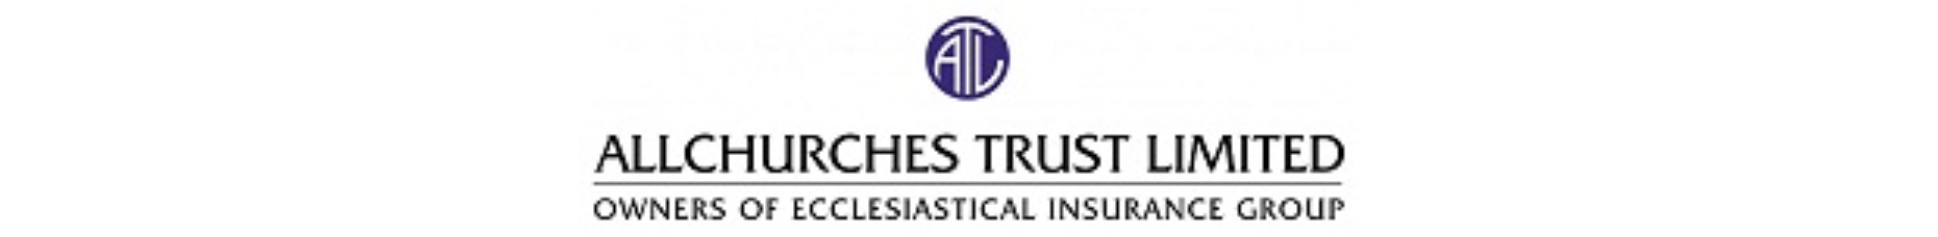 All Churches Trust Limited Logo